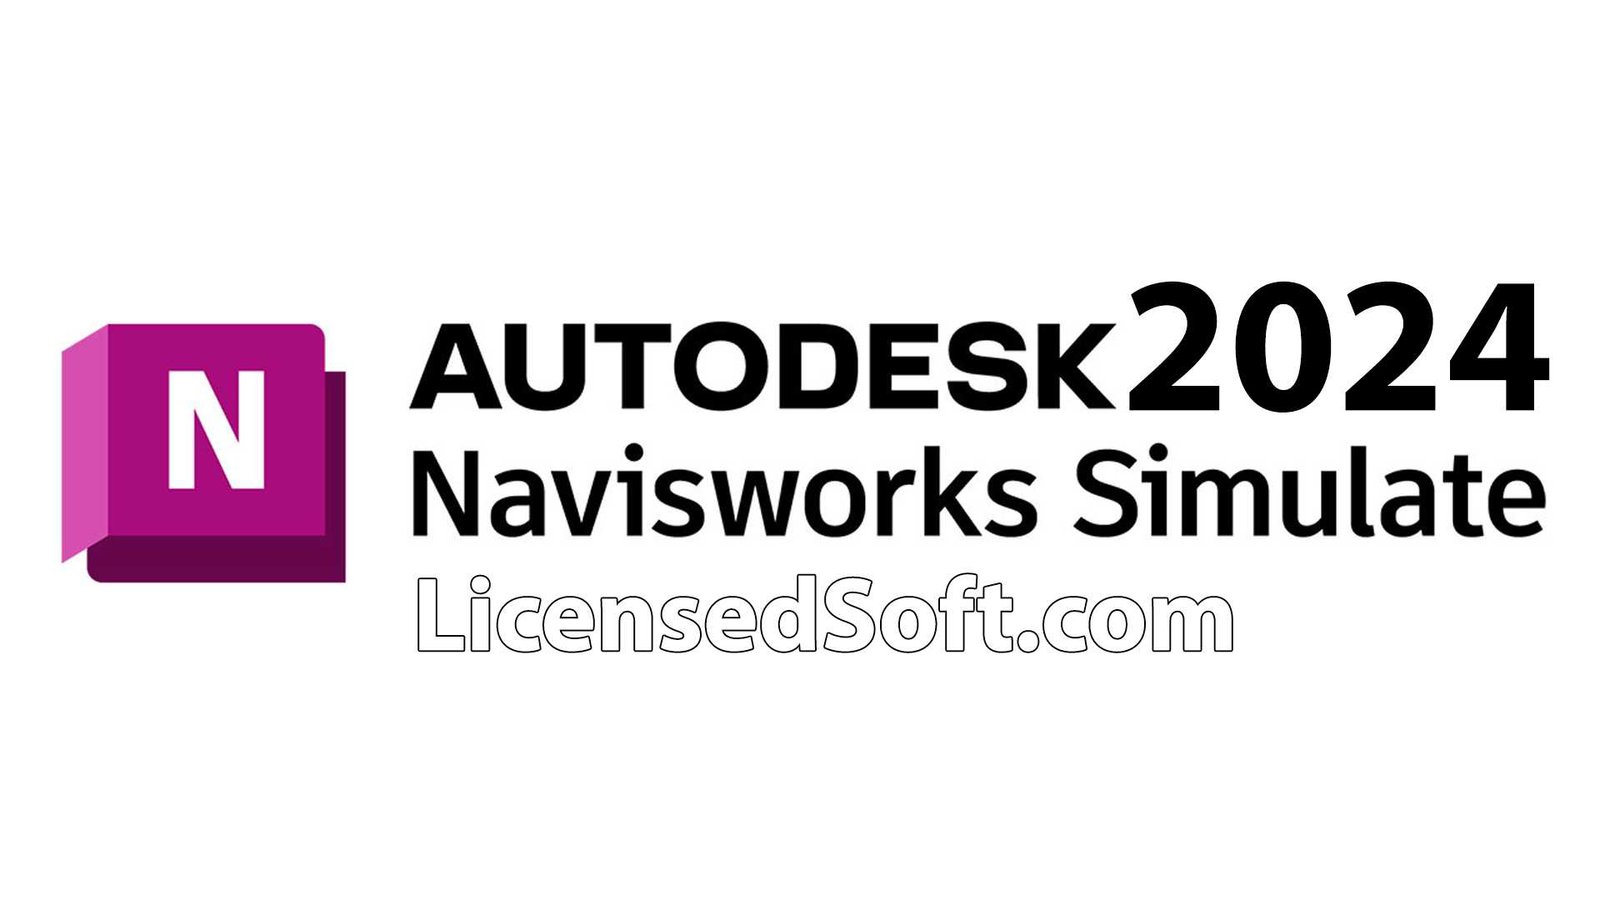 Autodesk Navisworks Simulate 2024 Cover Image By LicensedSoft